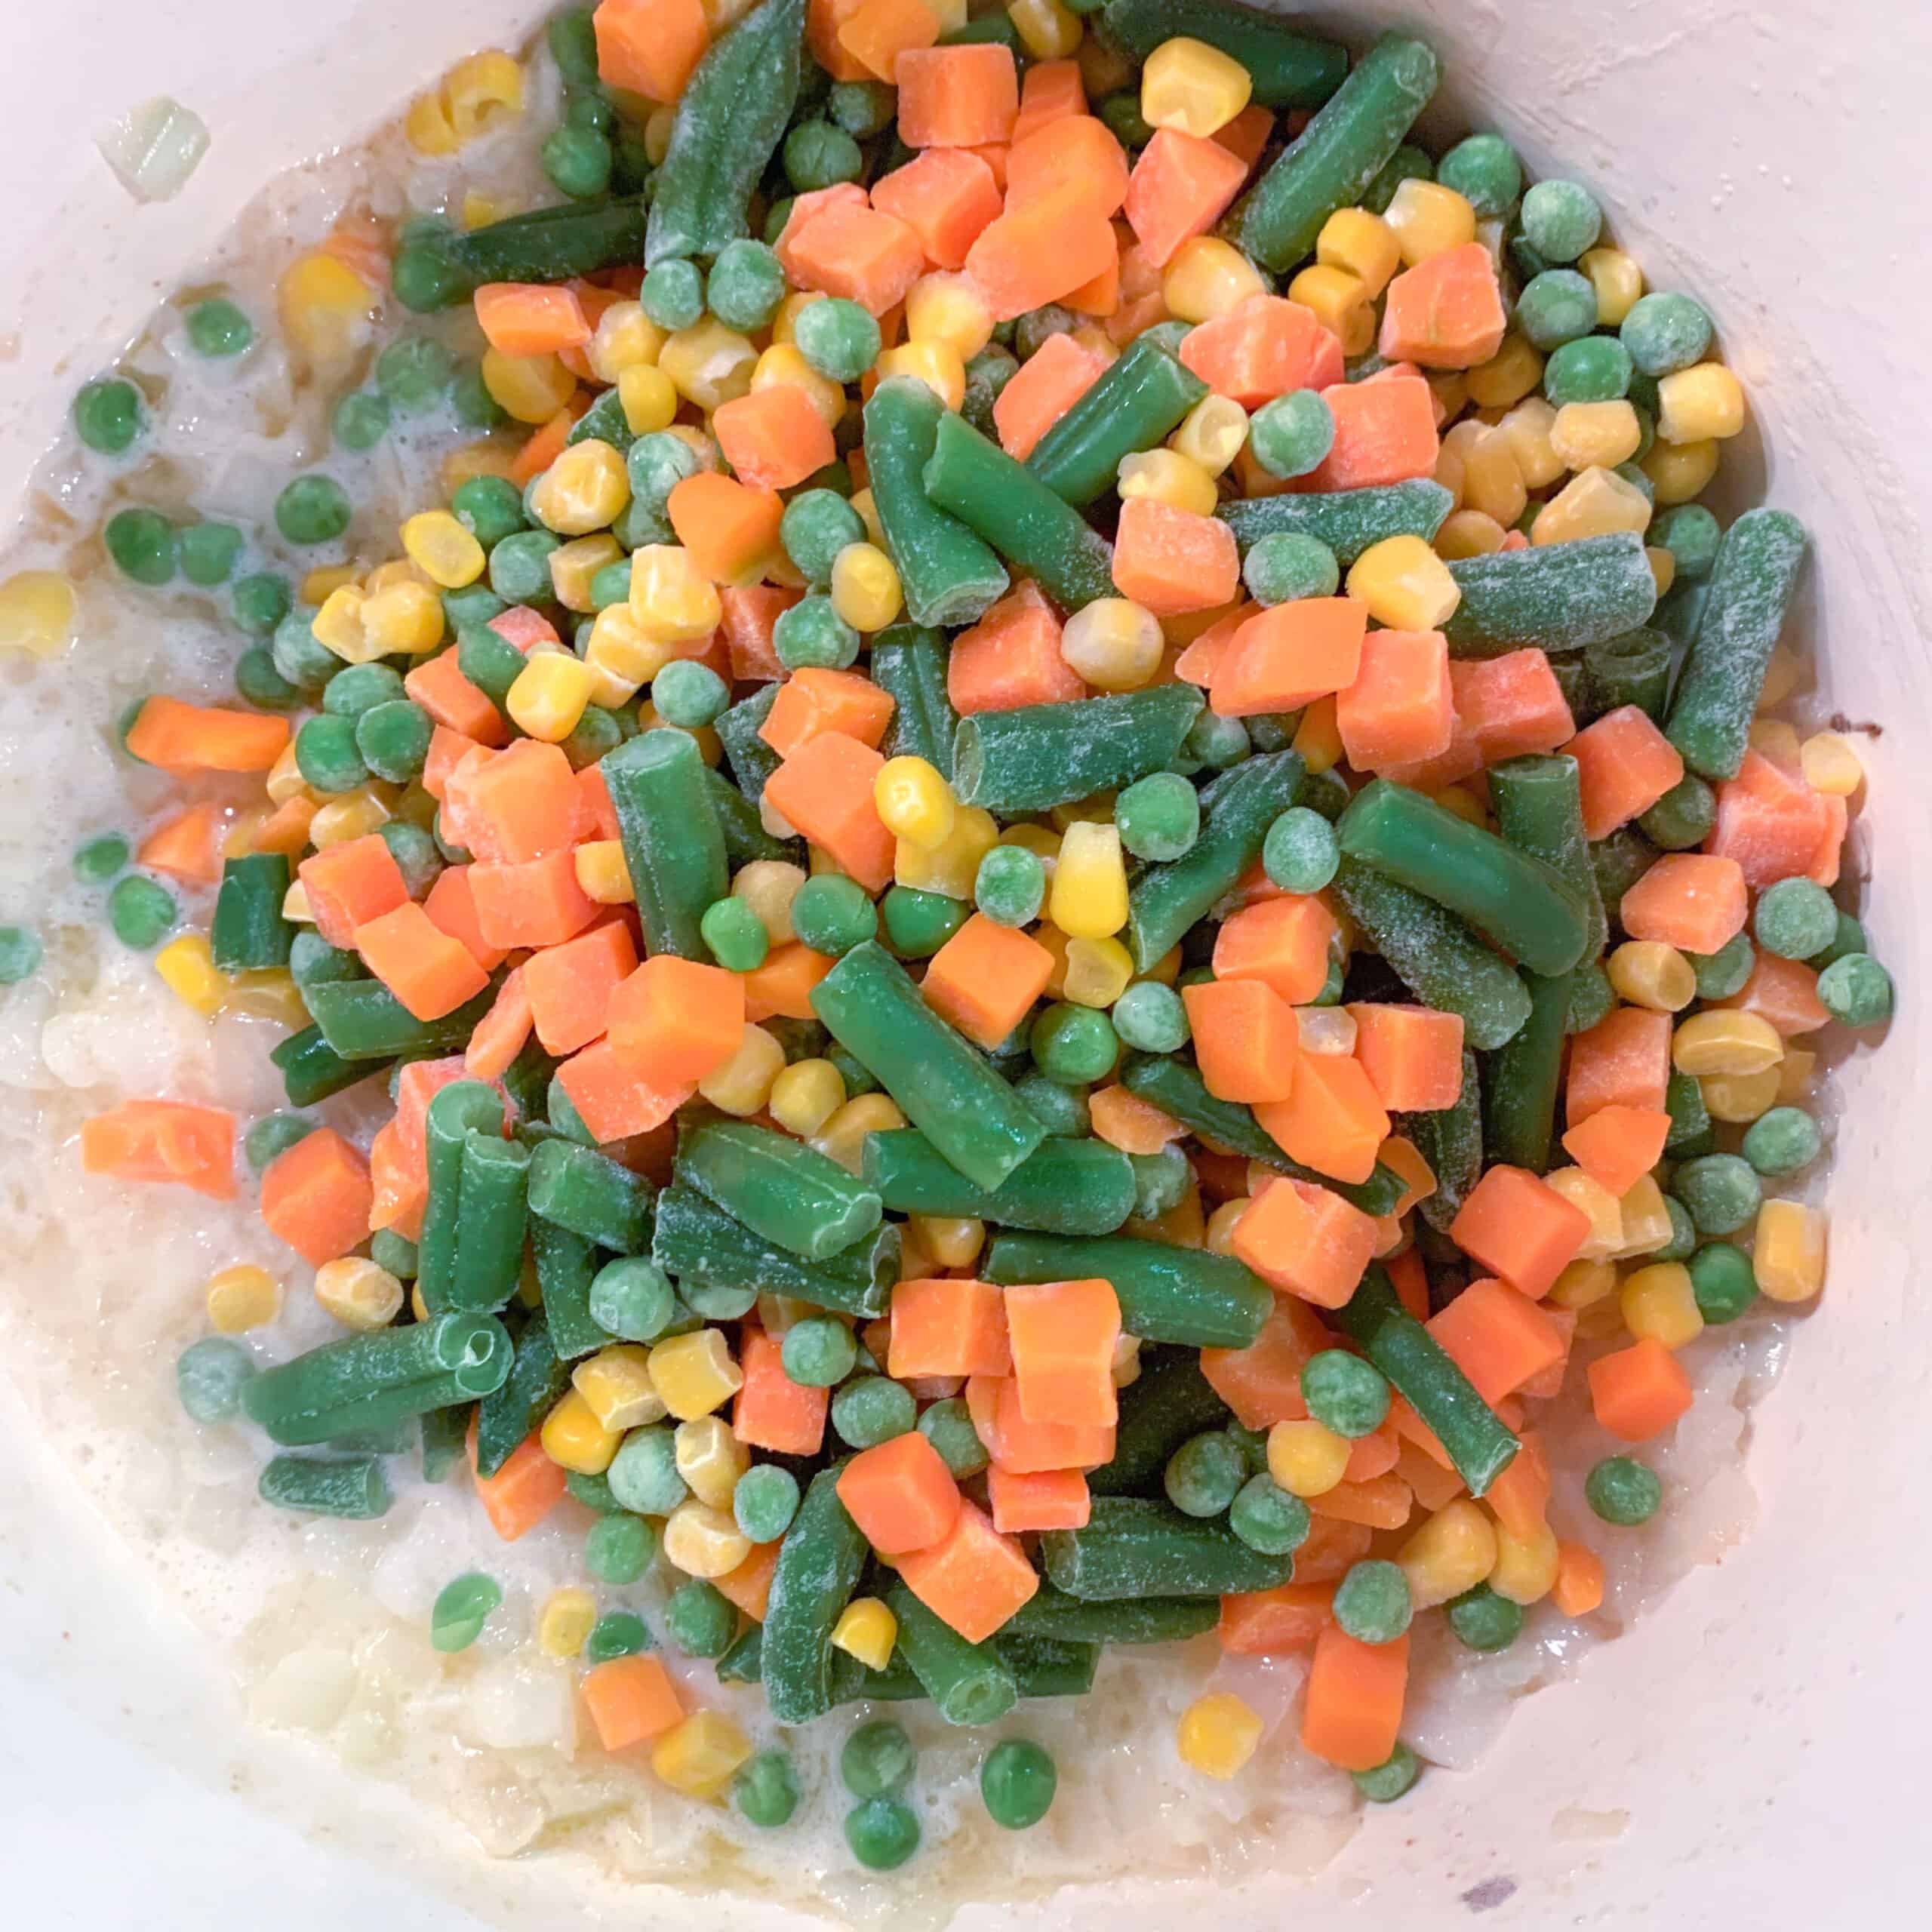 mixture of frozen vegetables, carrots, peas, beans, and corn